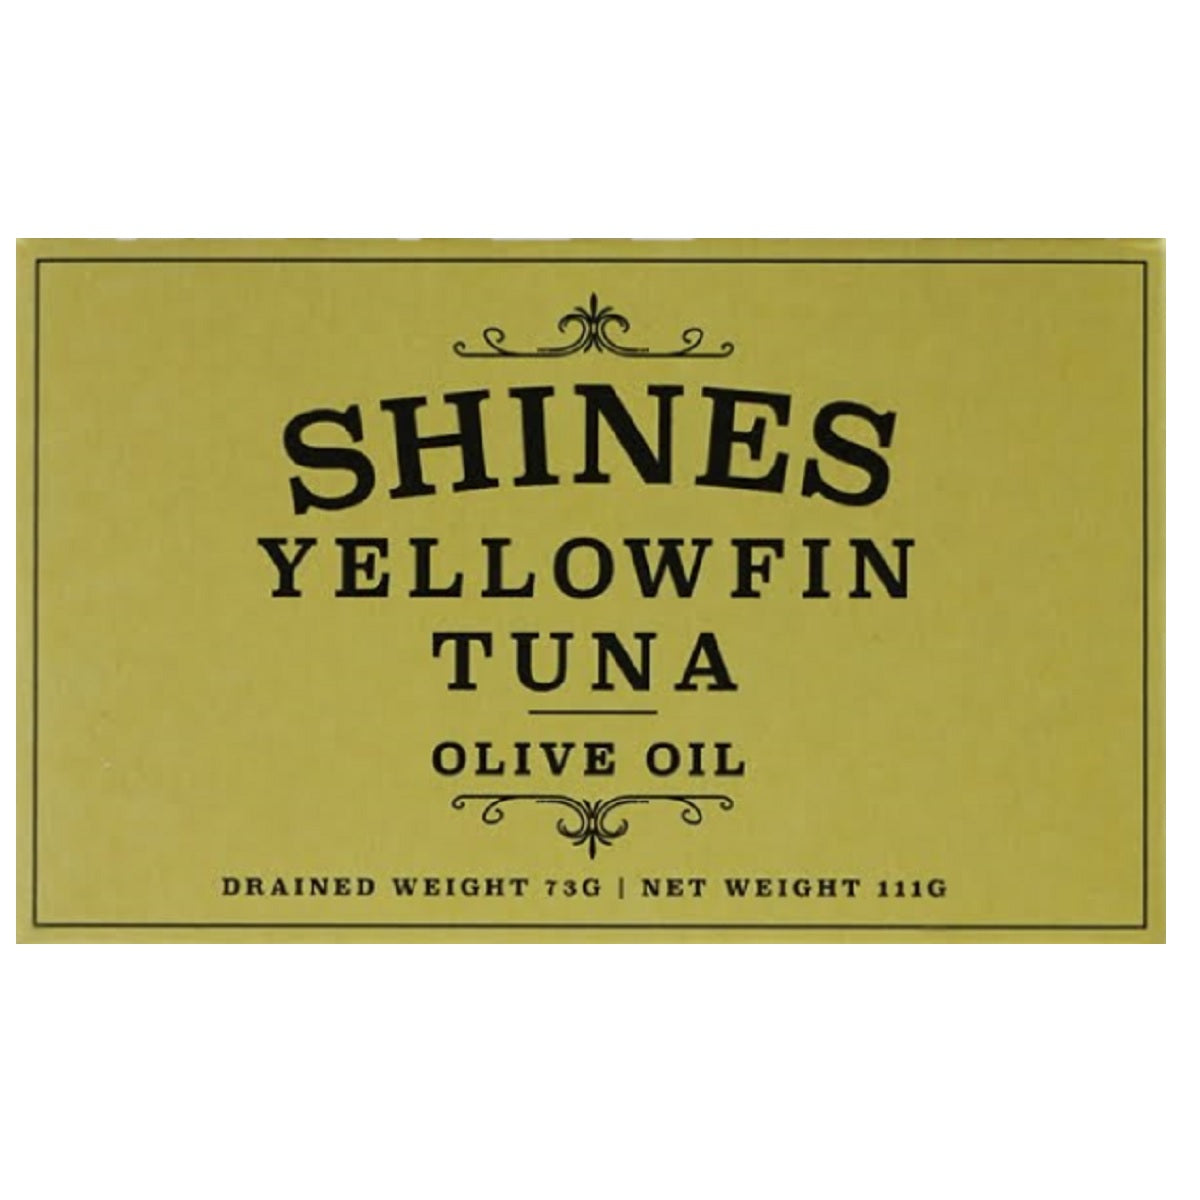 Shines Yellowfin Tuna Olive Oil 111g